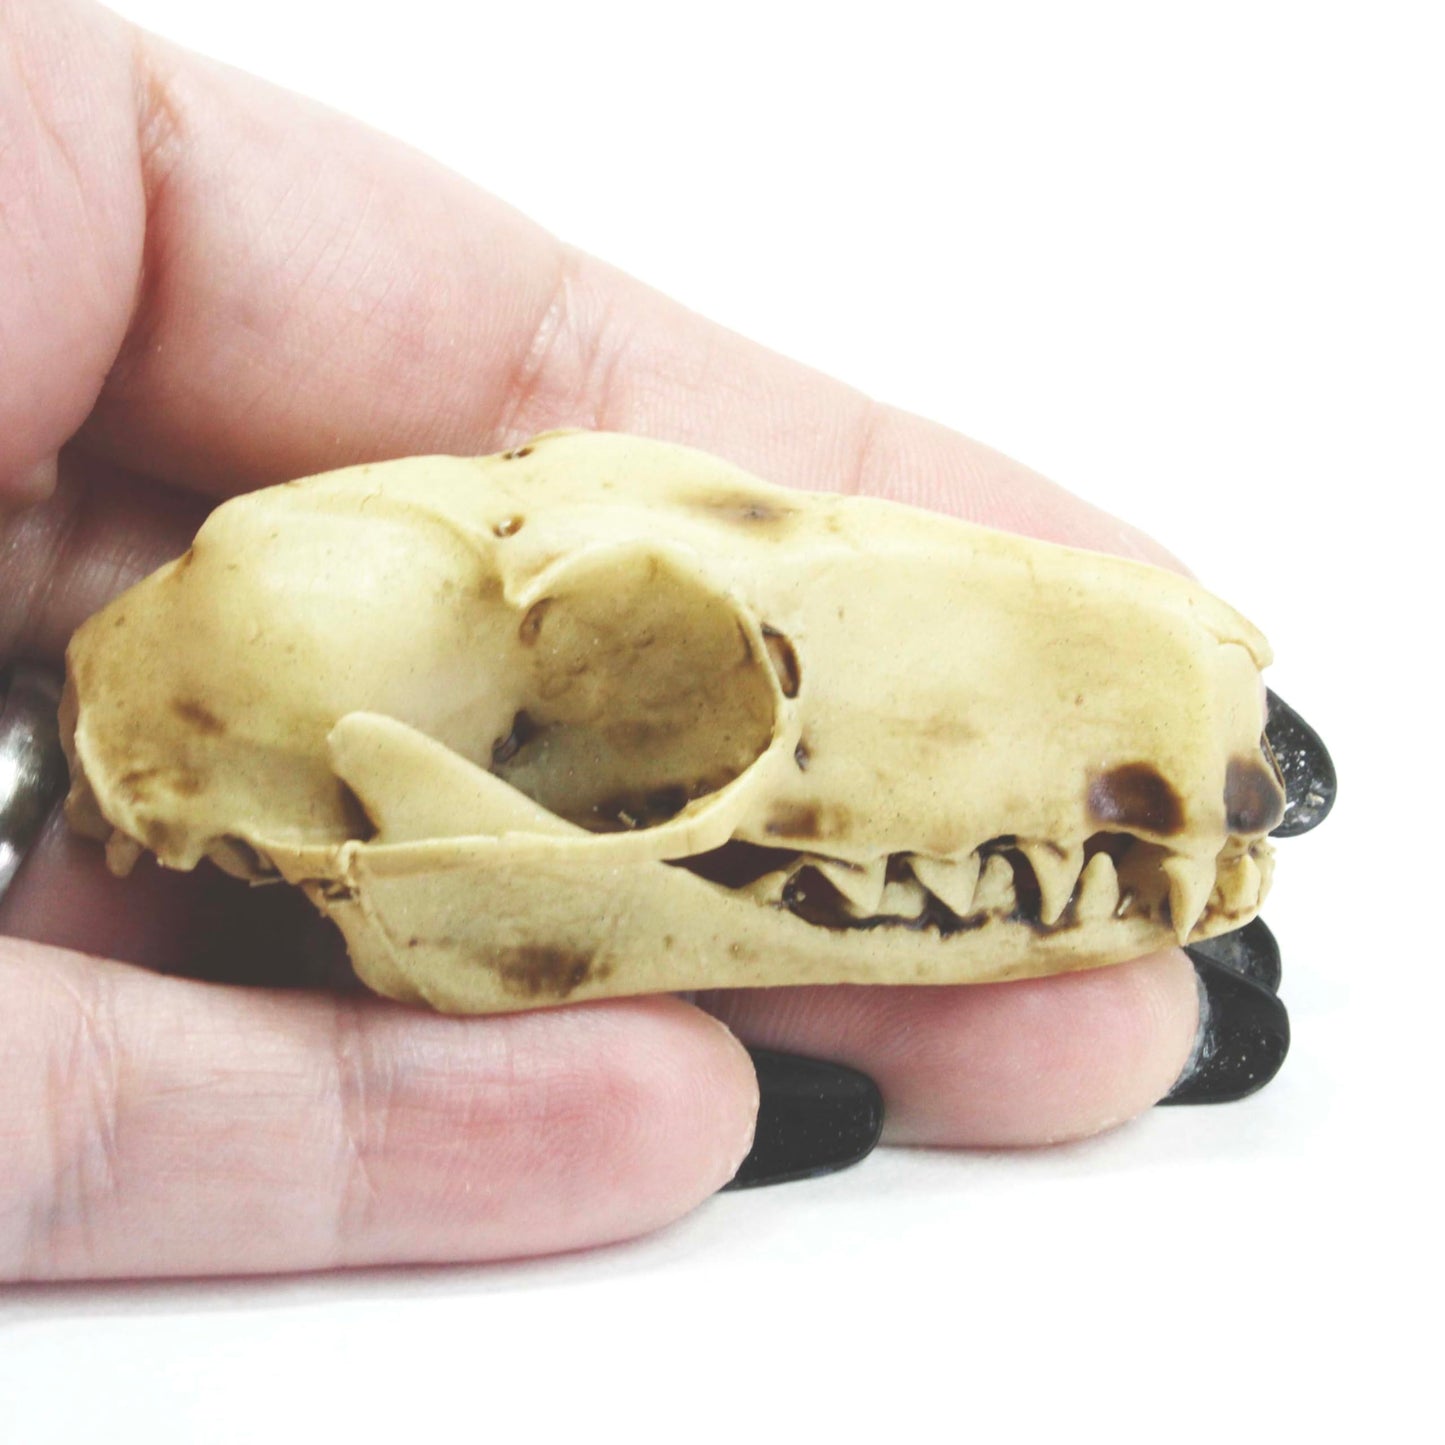 Bat Skull Hammer headed Bat replica skull full size 1:1 scale 2.5 inch cruelty free taxidermy